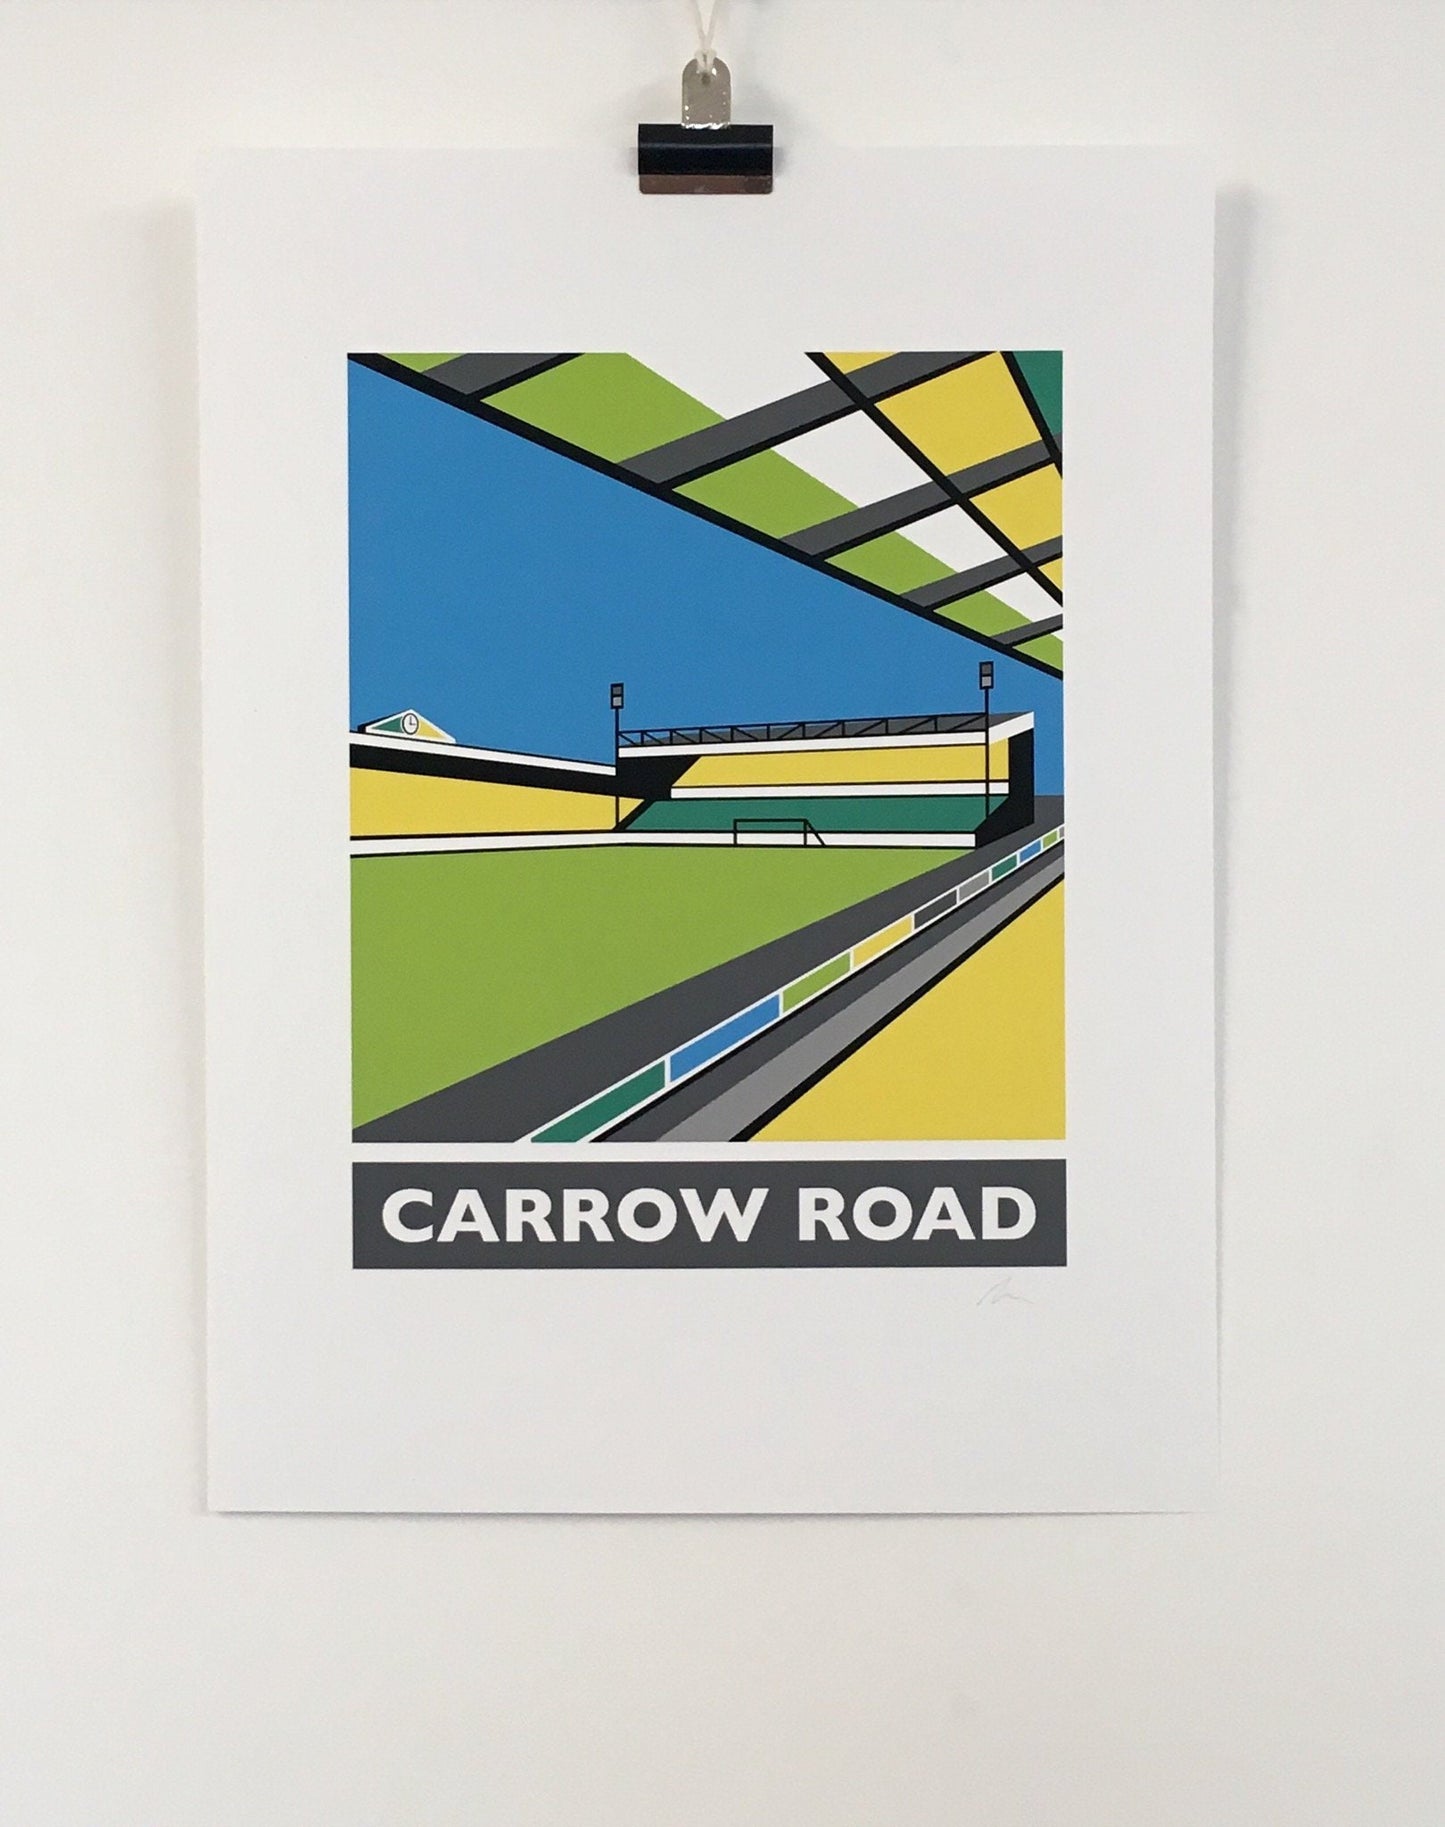 CARROW ROAD Travel Poster - Norwich City Football Club Stadium - Art Deco Print - Illustration by Rebecca Pymar